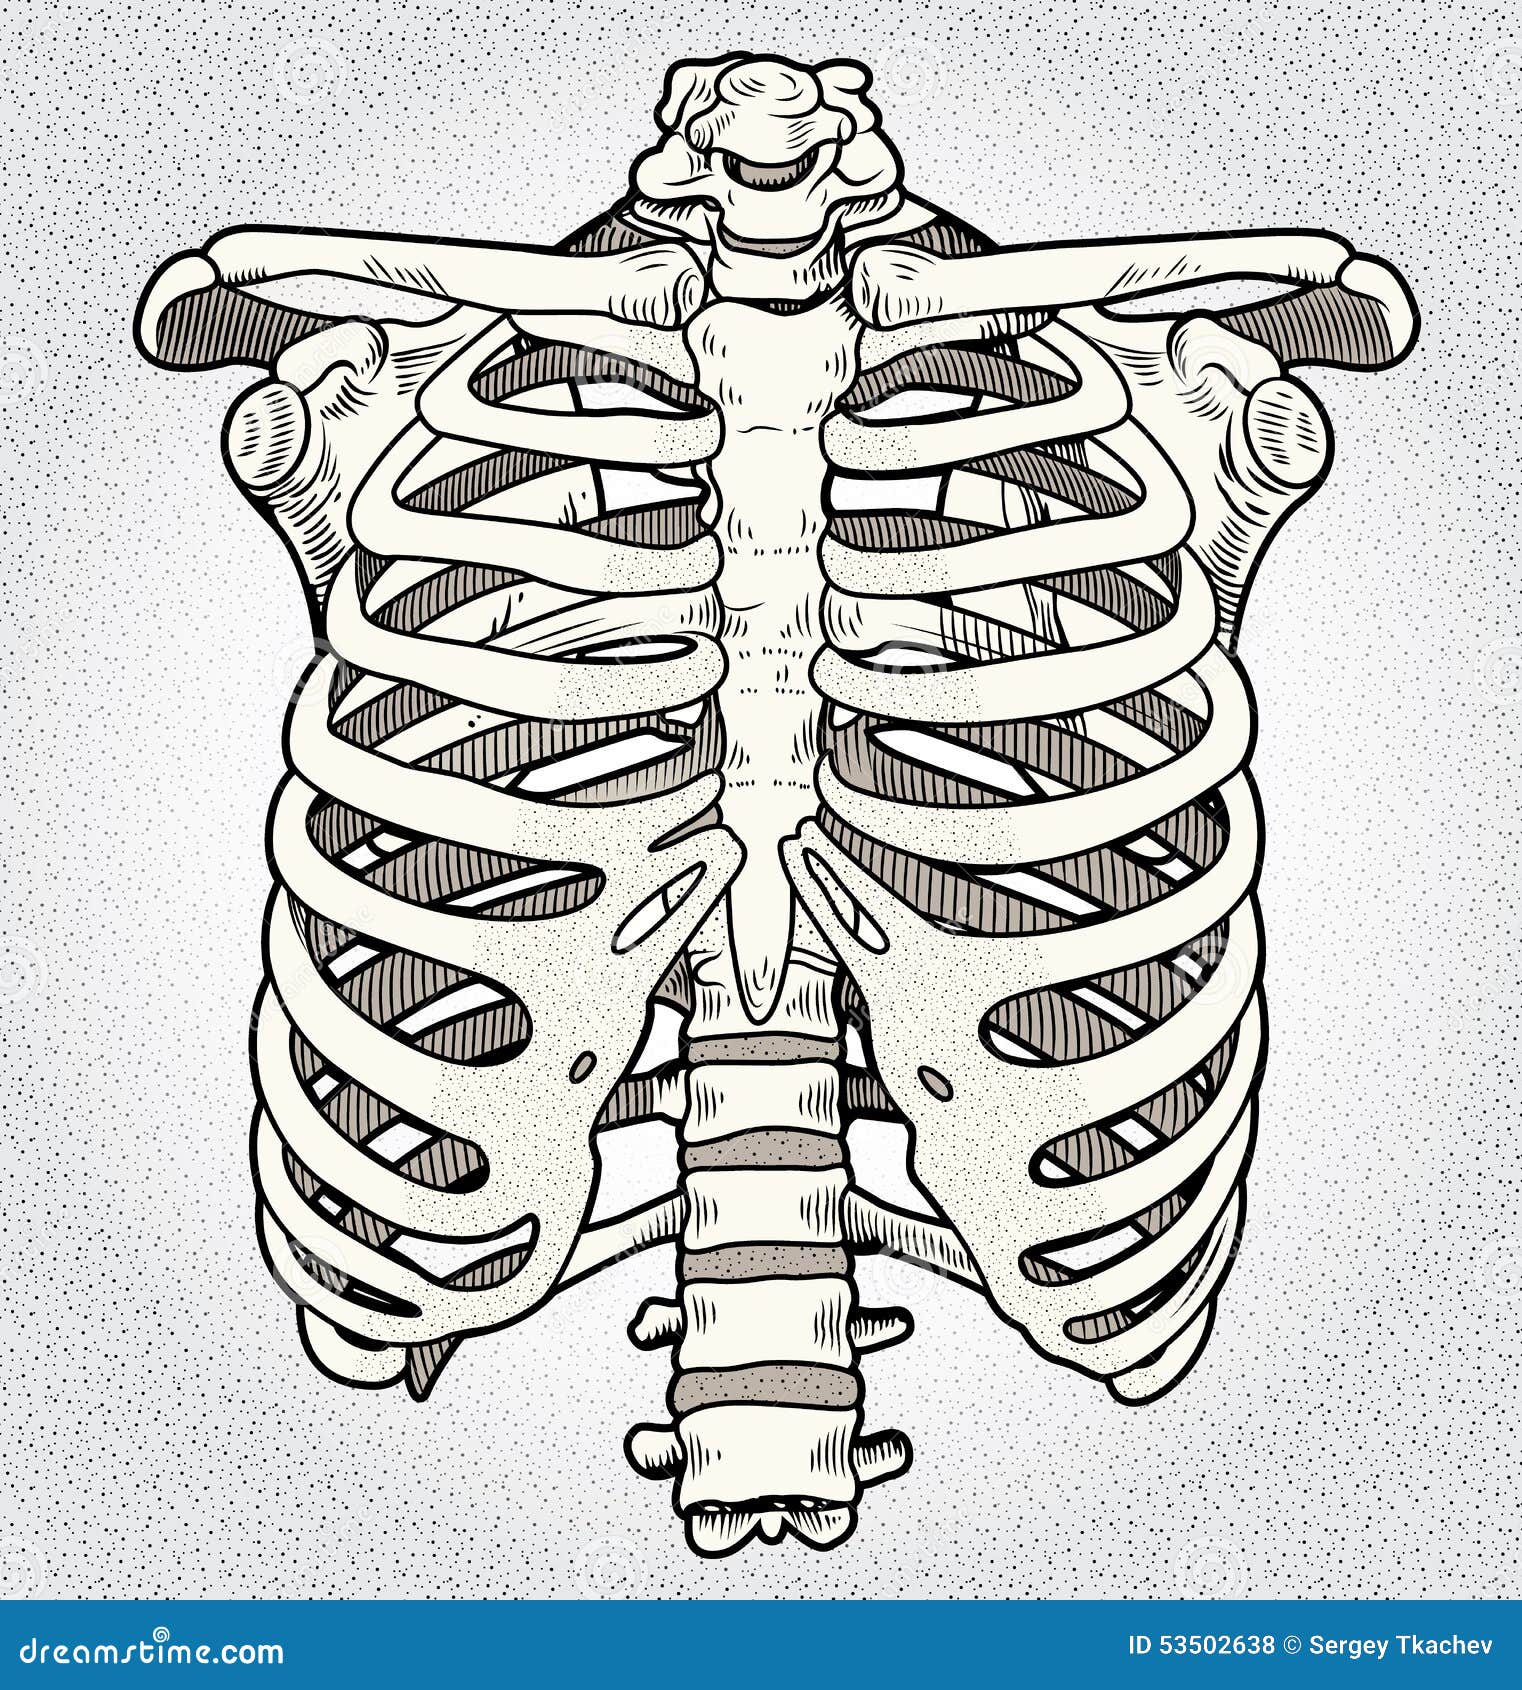 Ribcage stock illustration. Illustration of anatomy ...